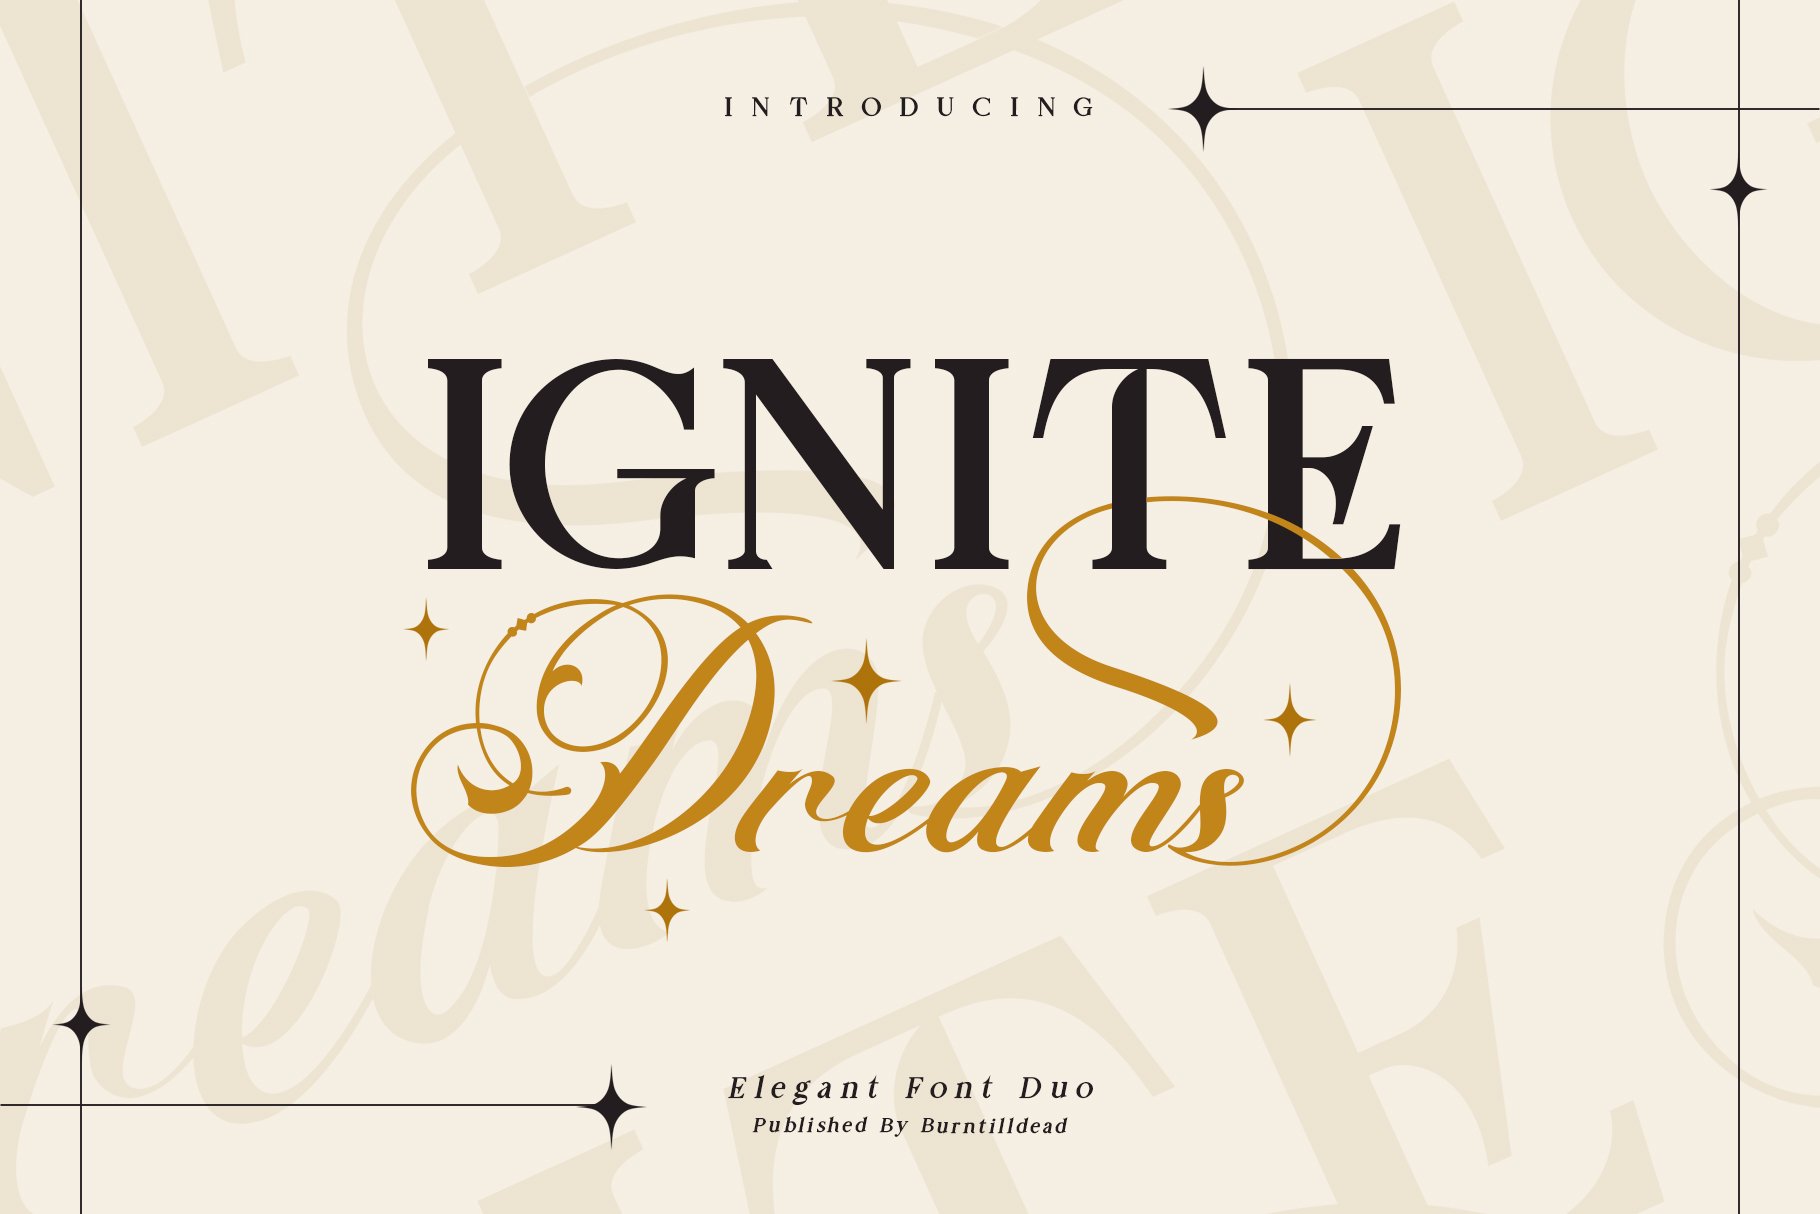 Example font Ignite Dreams #1